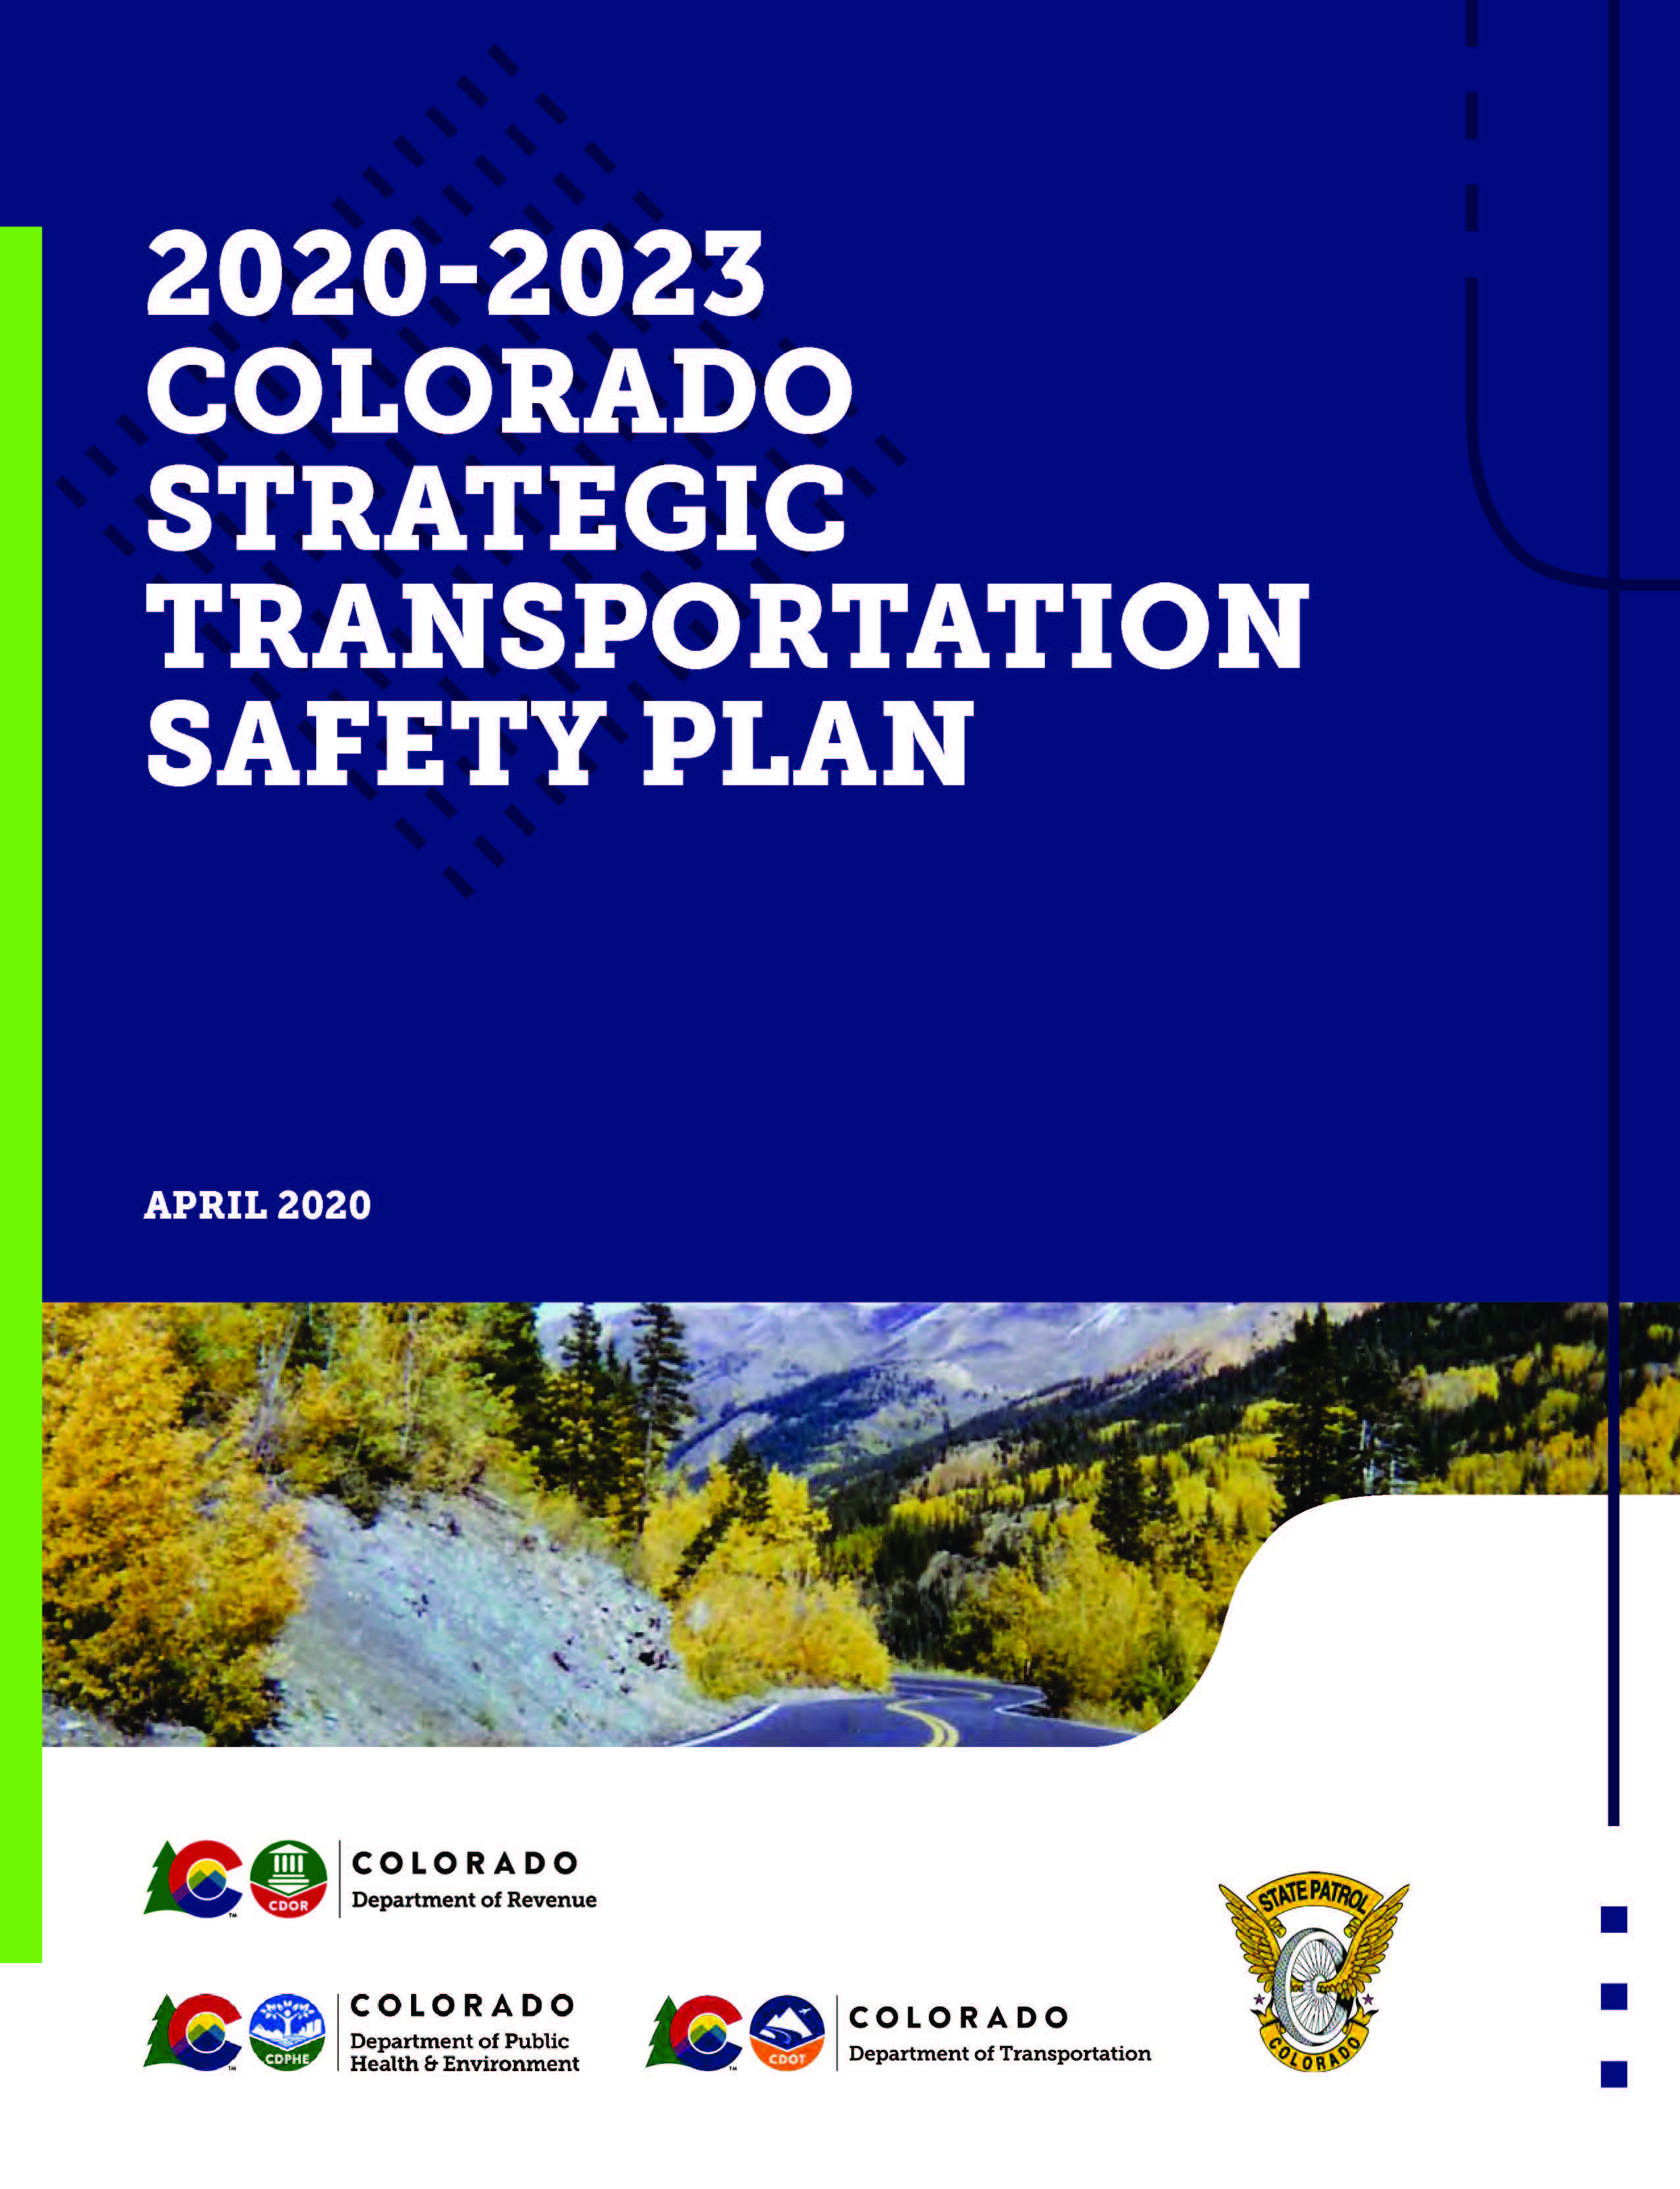 Colorado_StrategicTransportationSafetyPlan.jpg detail image